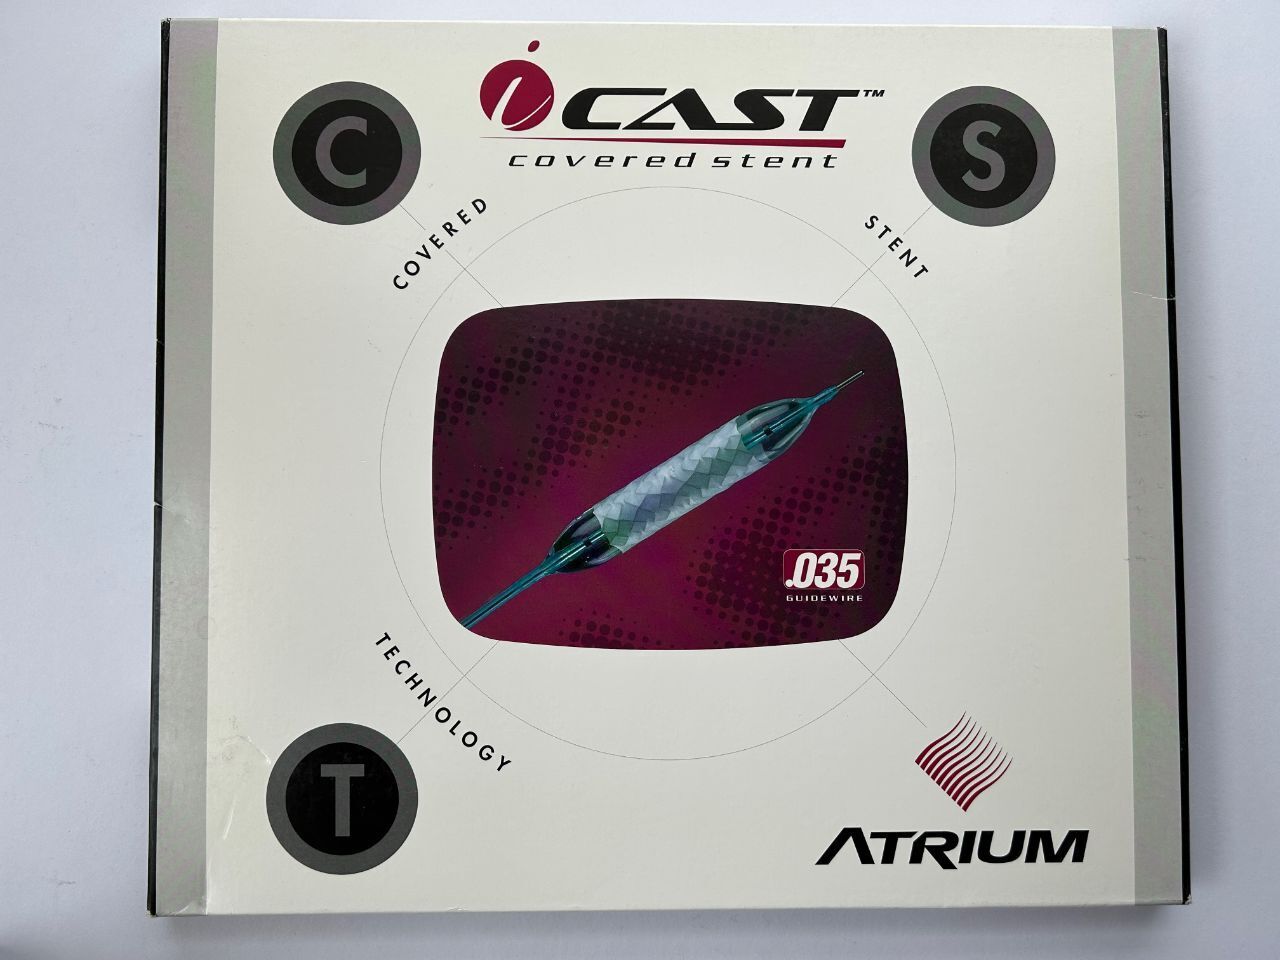 ATRIUM CAST covered stent 5mm x 59mm x 120 cm REF: 85411 DATE: 2012/11